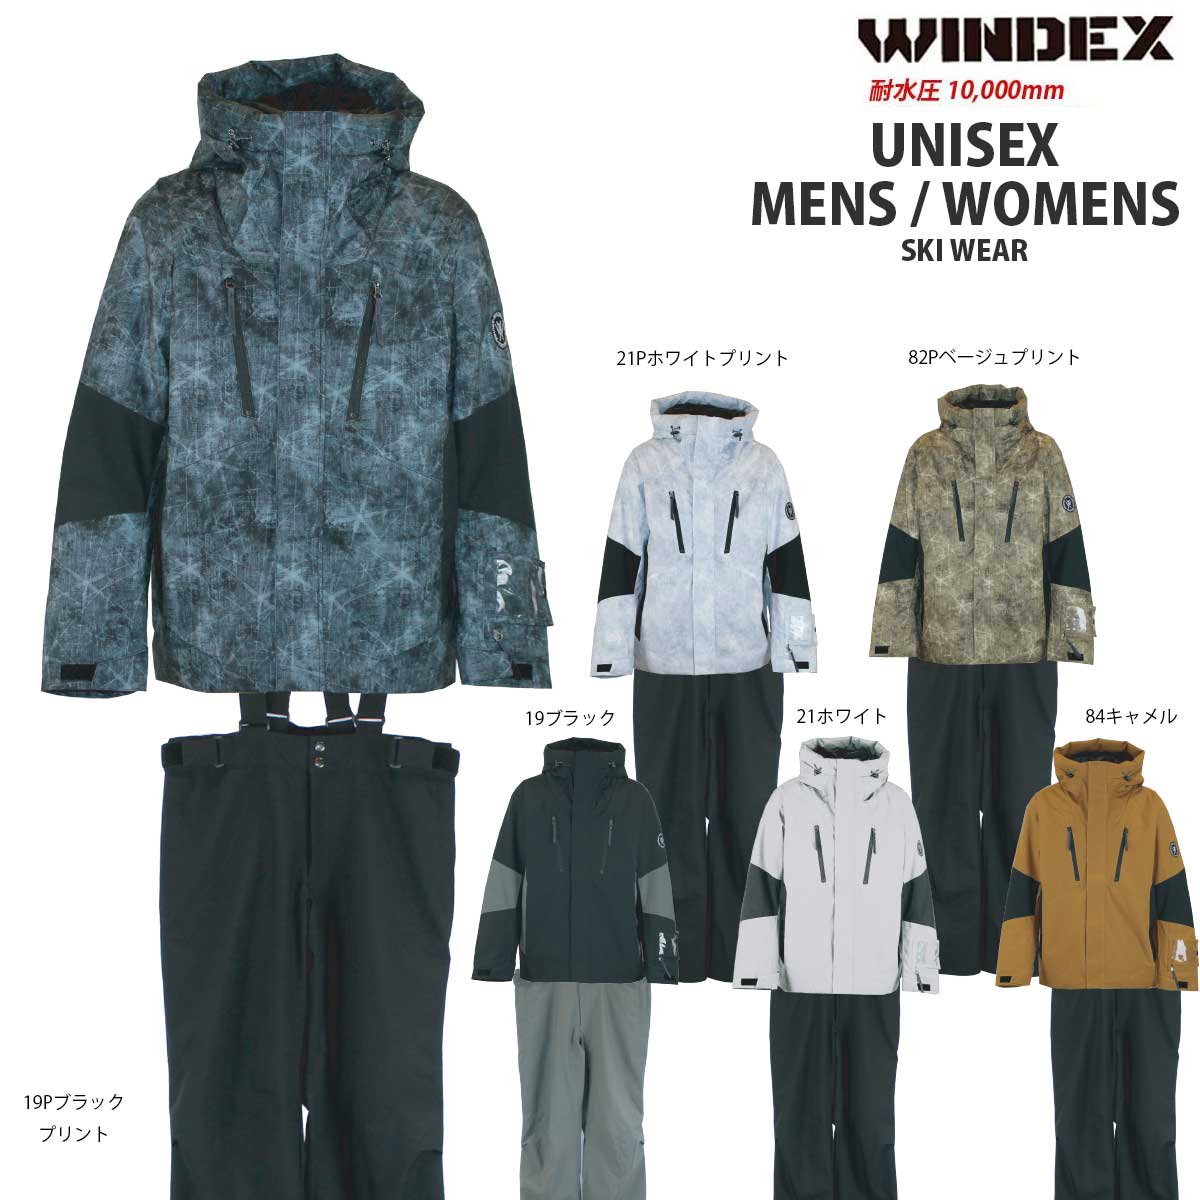 WINDEX スキーウェア メンズLサイズ - ウエア(男性用)